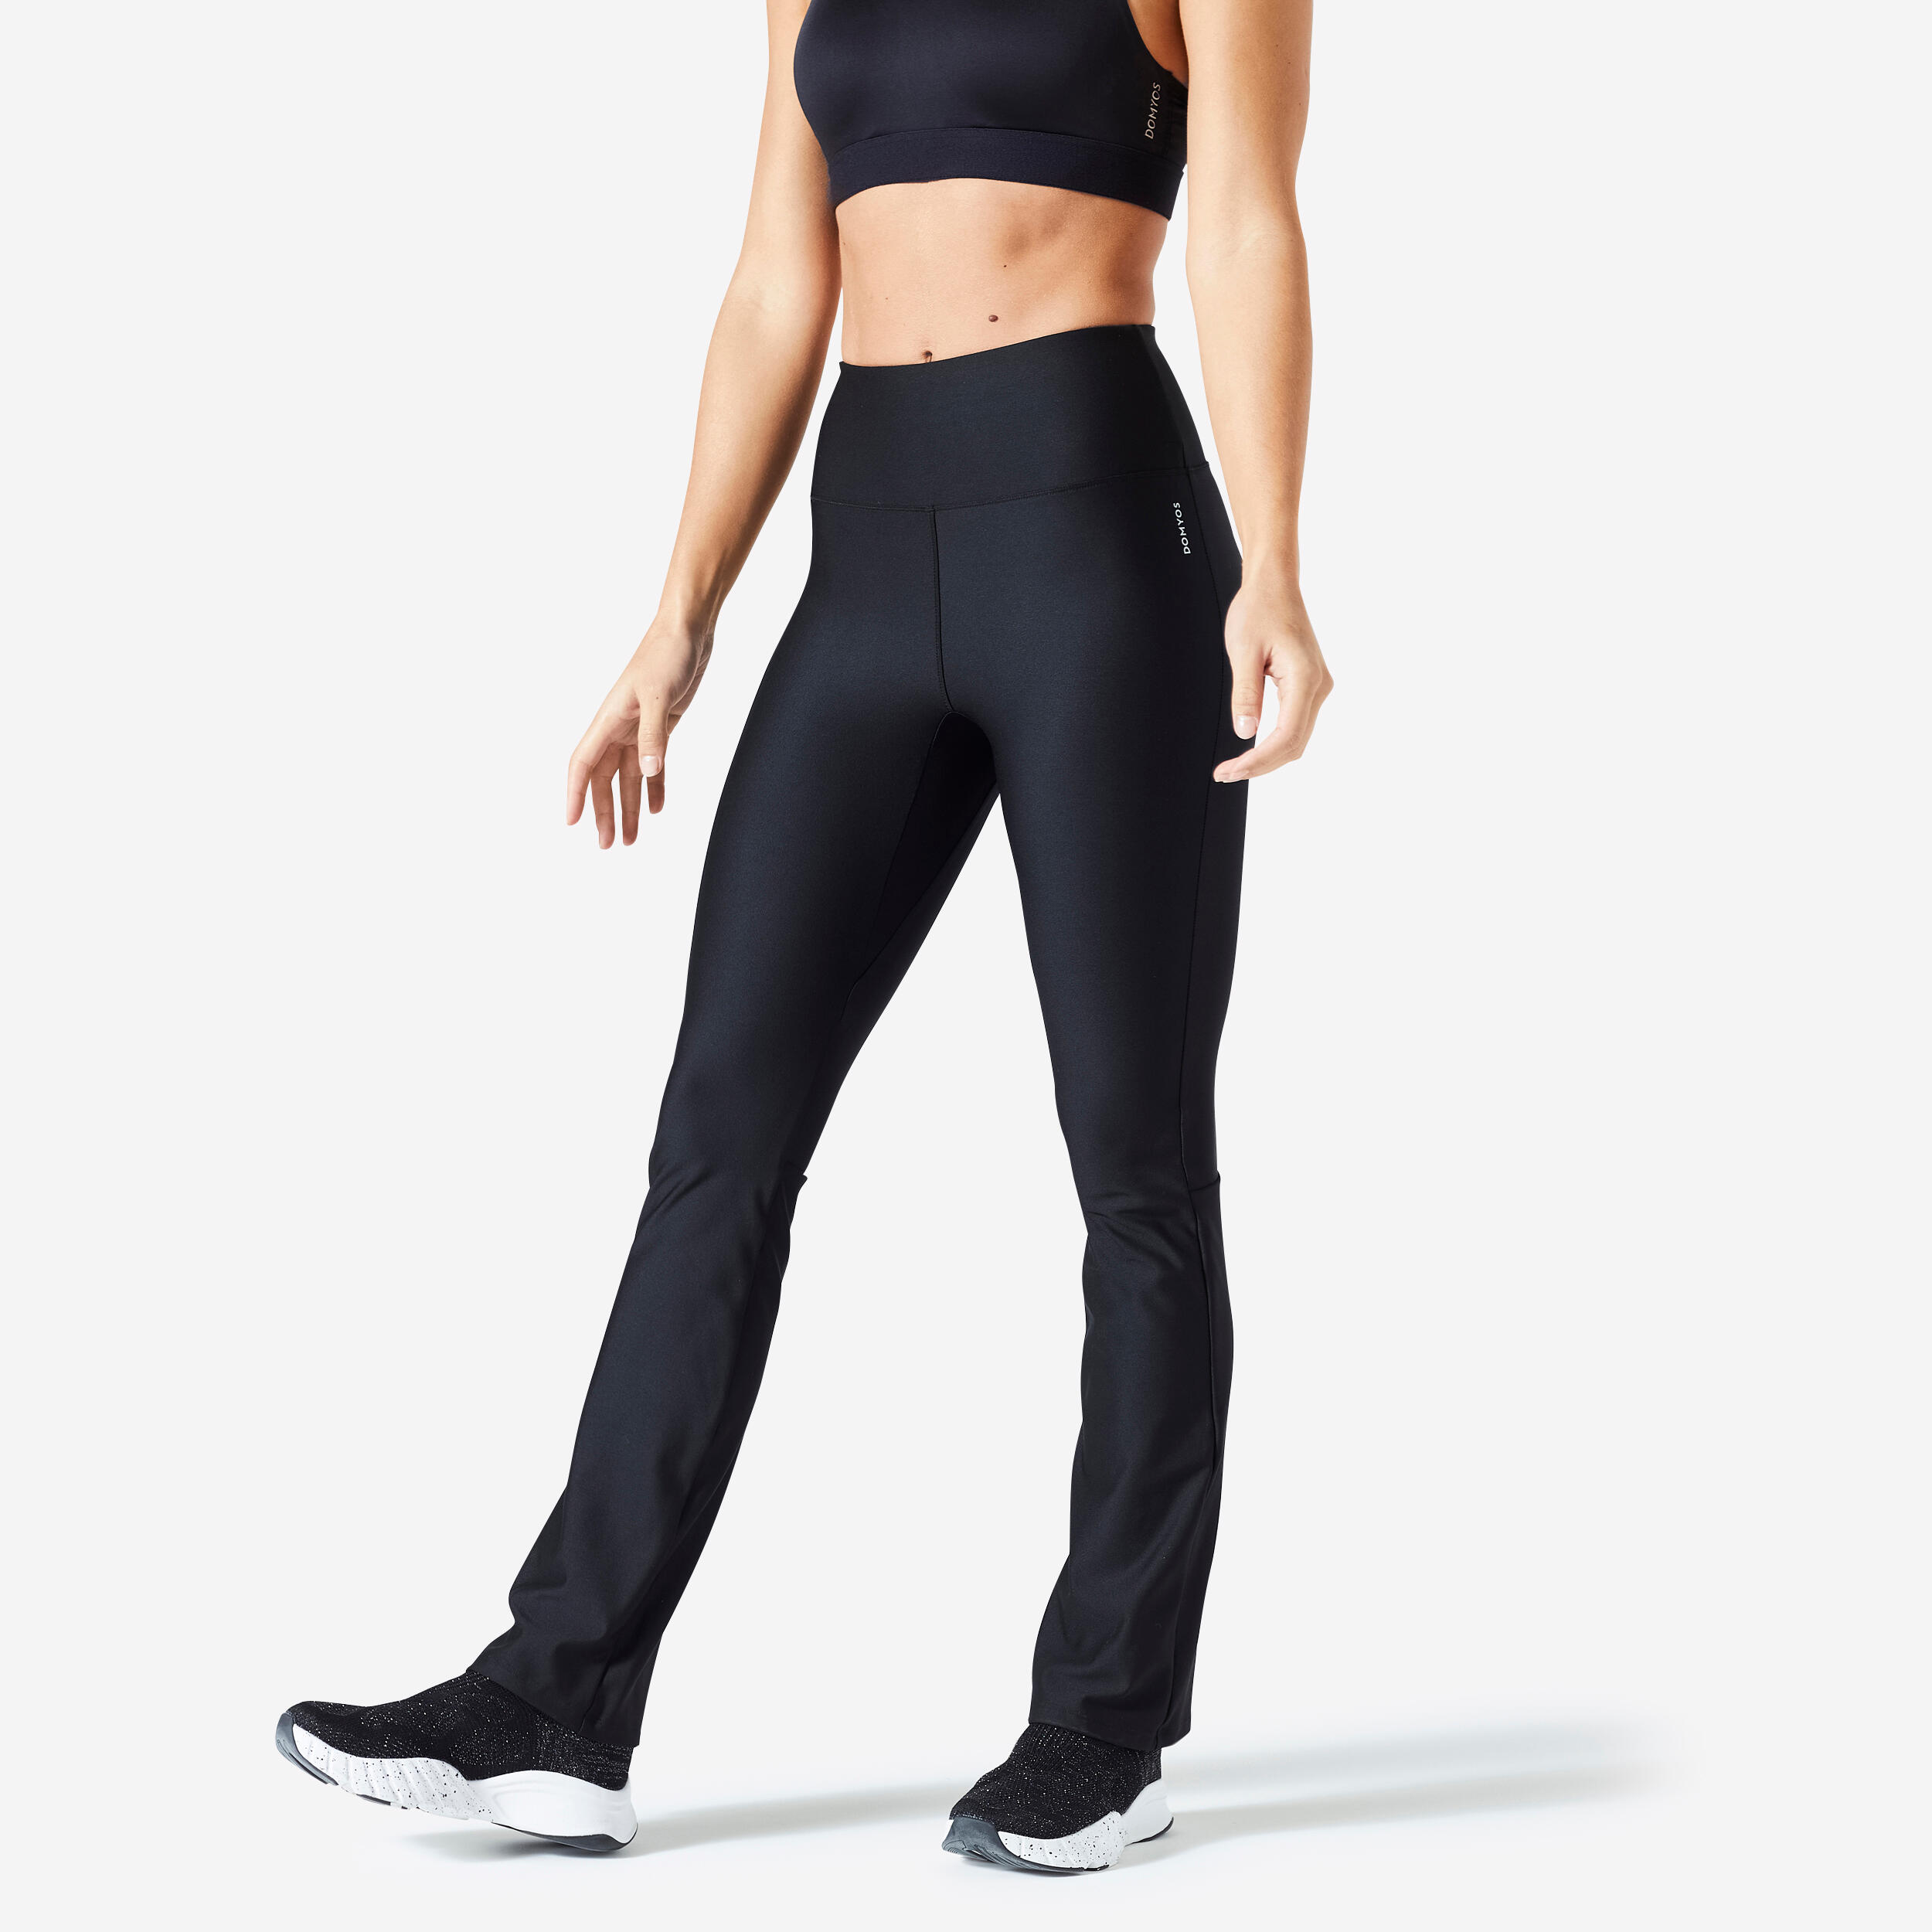 Women’s Fitness Pants - 100 Black